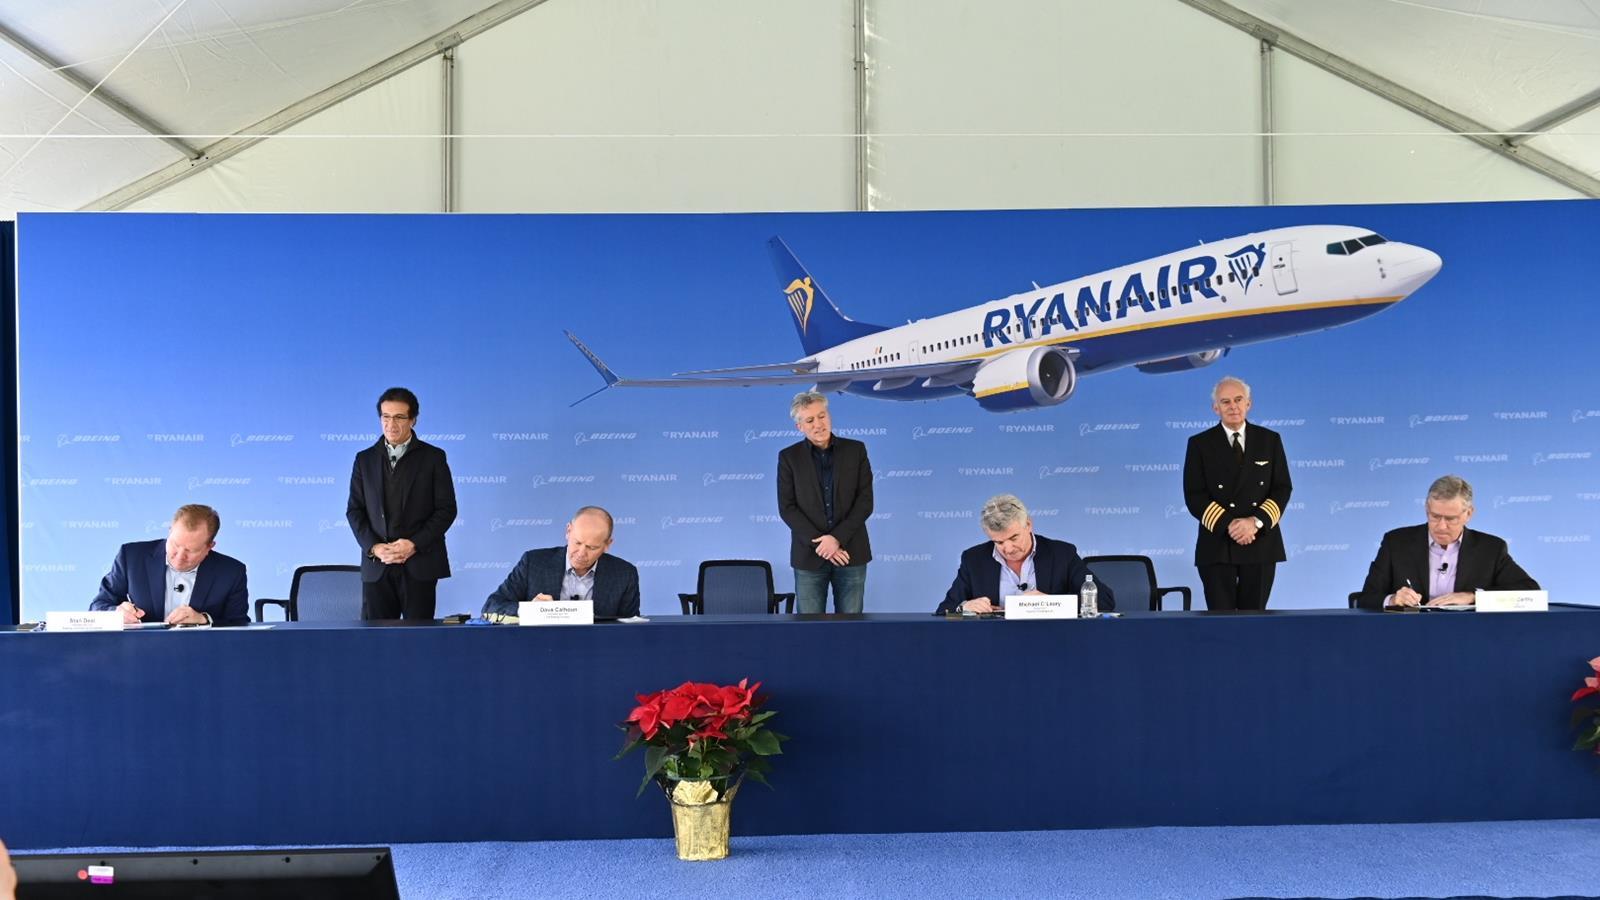 Ryanair Boeing Max signing Dec 2020